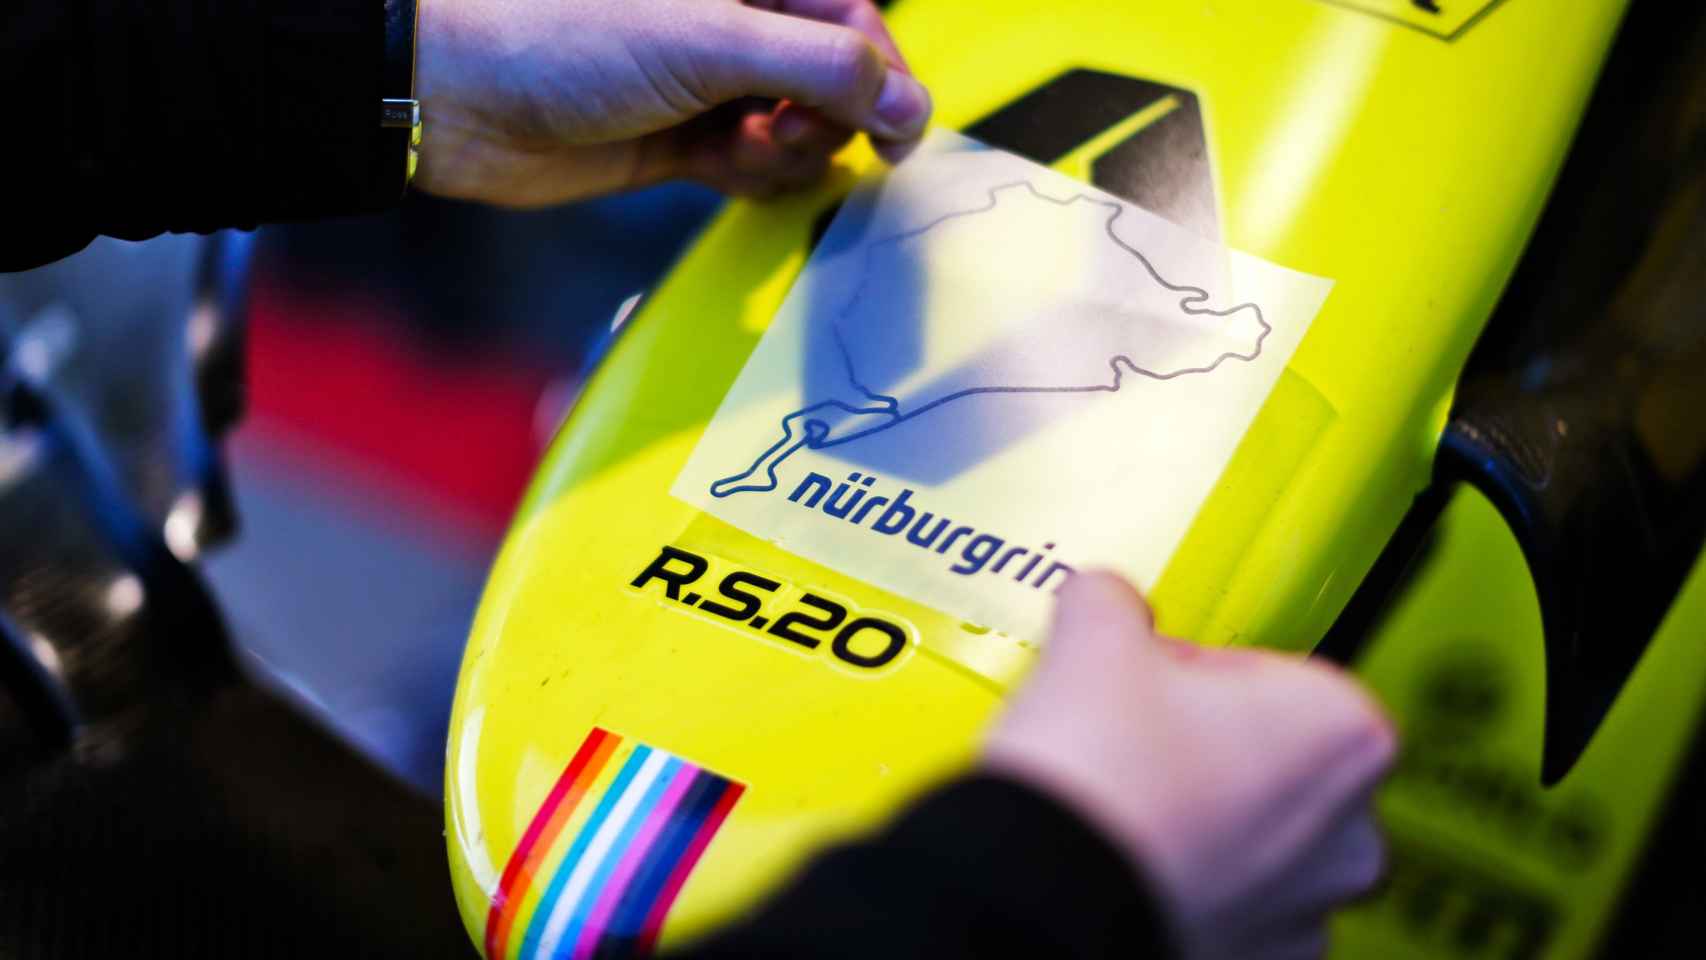 Nurburgring, lugar especial para Renault